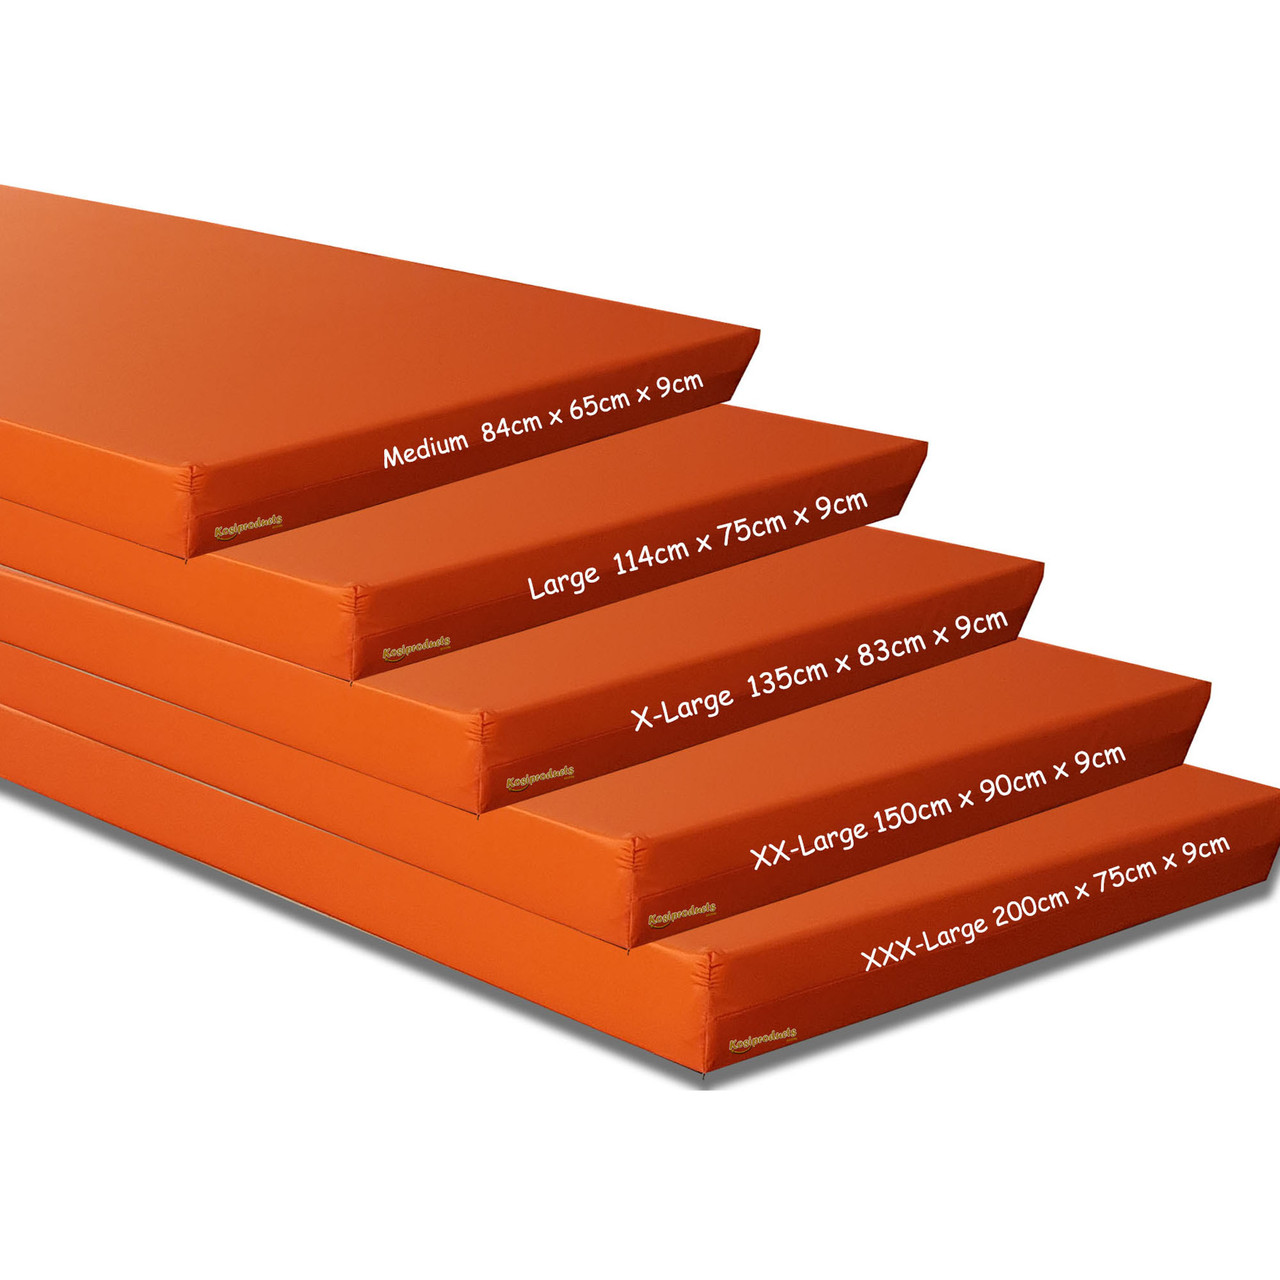 Kosipad Orange Gymnastics crash landing gym mat 9cm thick-4